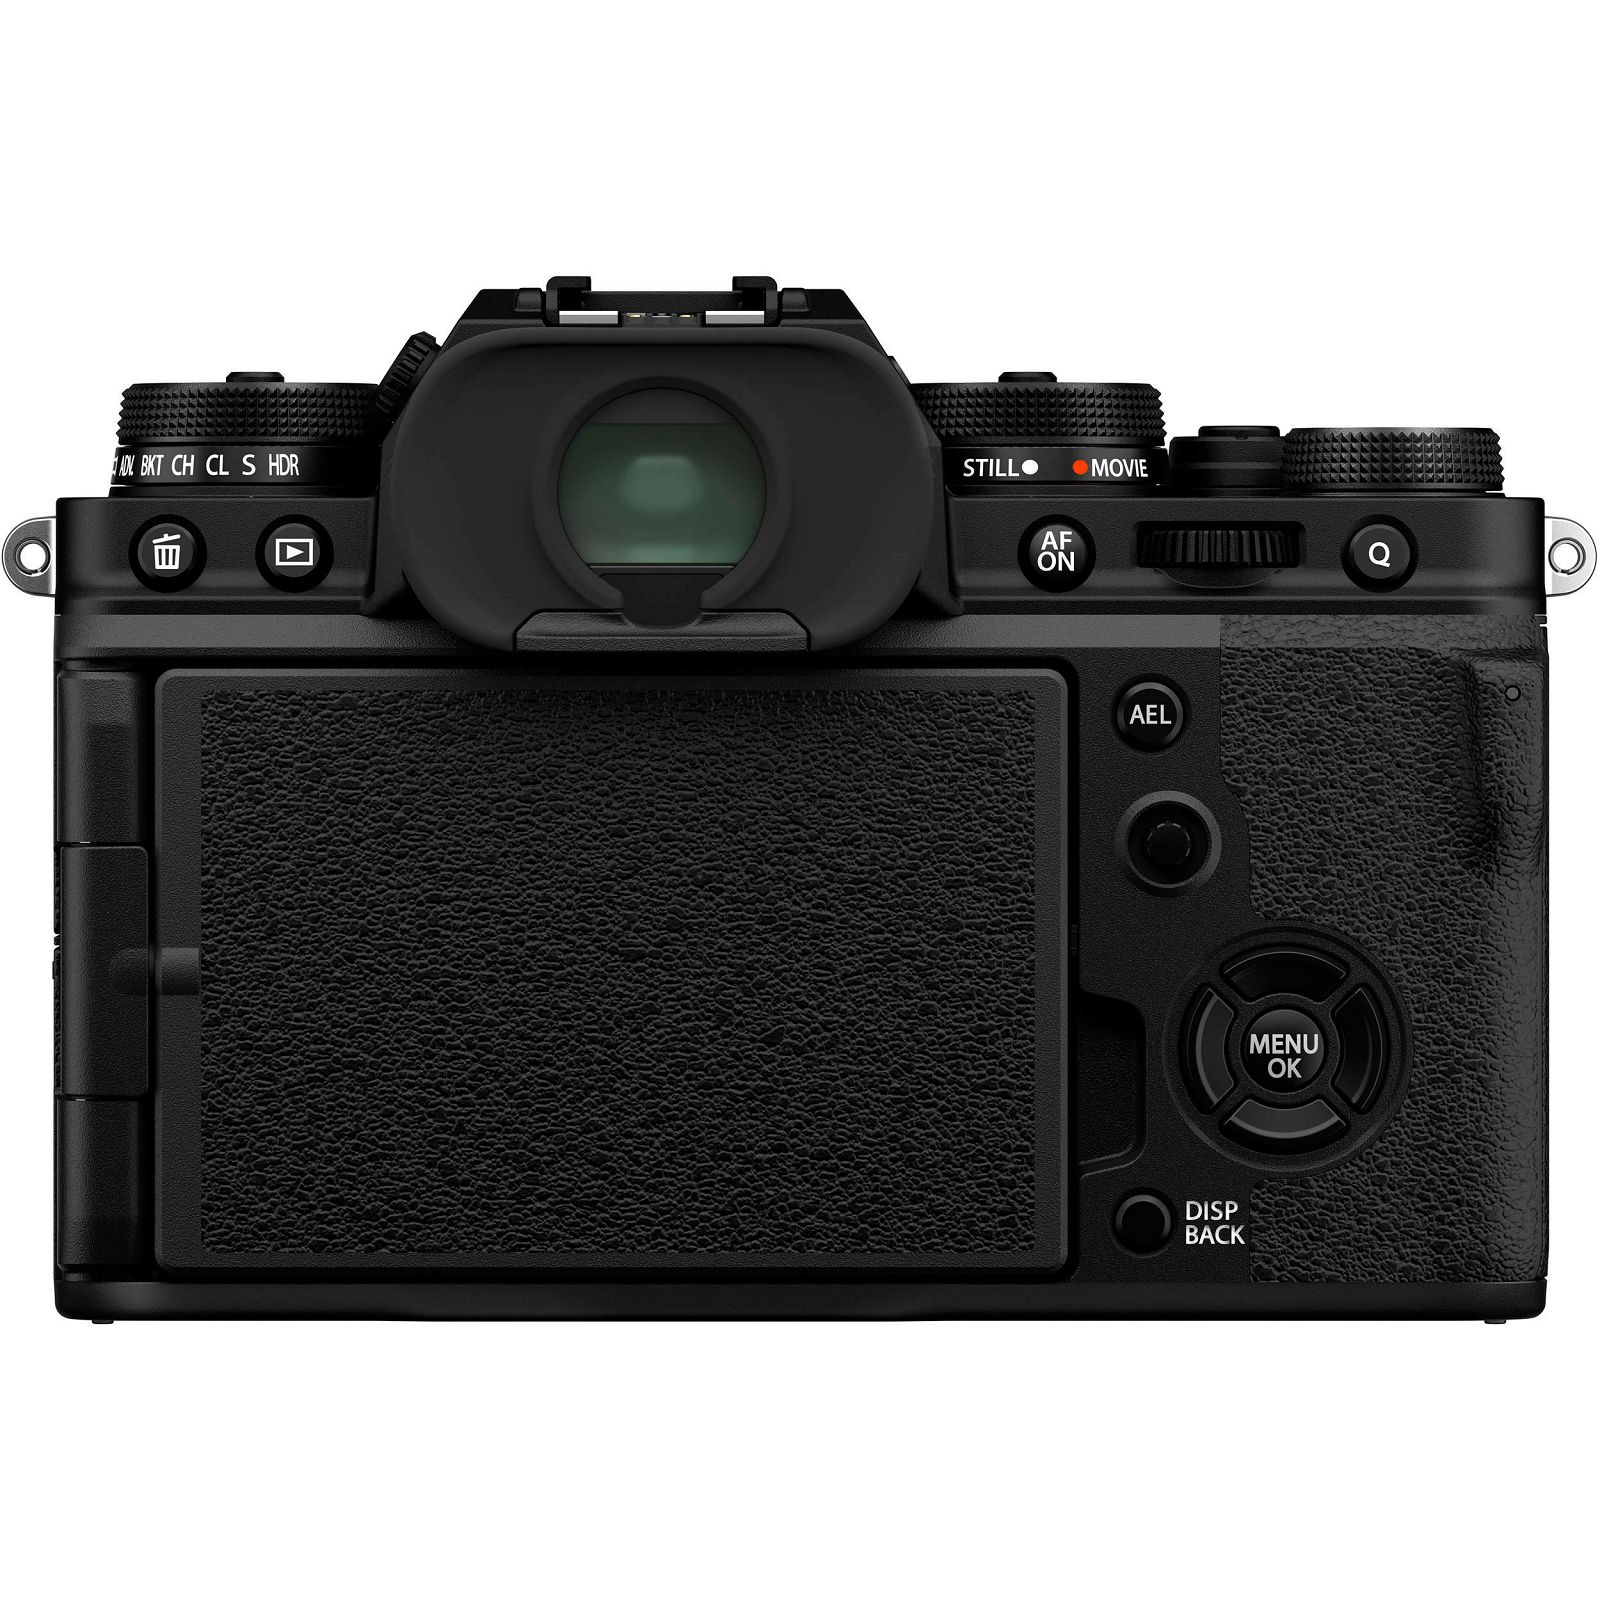 Fujifilm X-T4 Body Black crni Fuji digitalni fotoaparat Mirrorless camera (16650467)